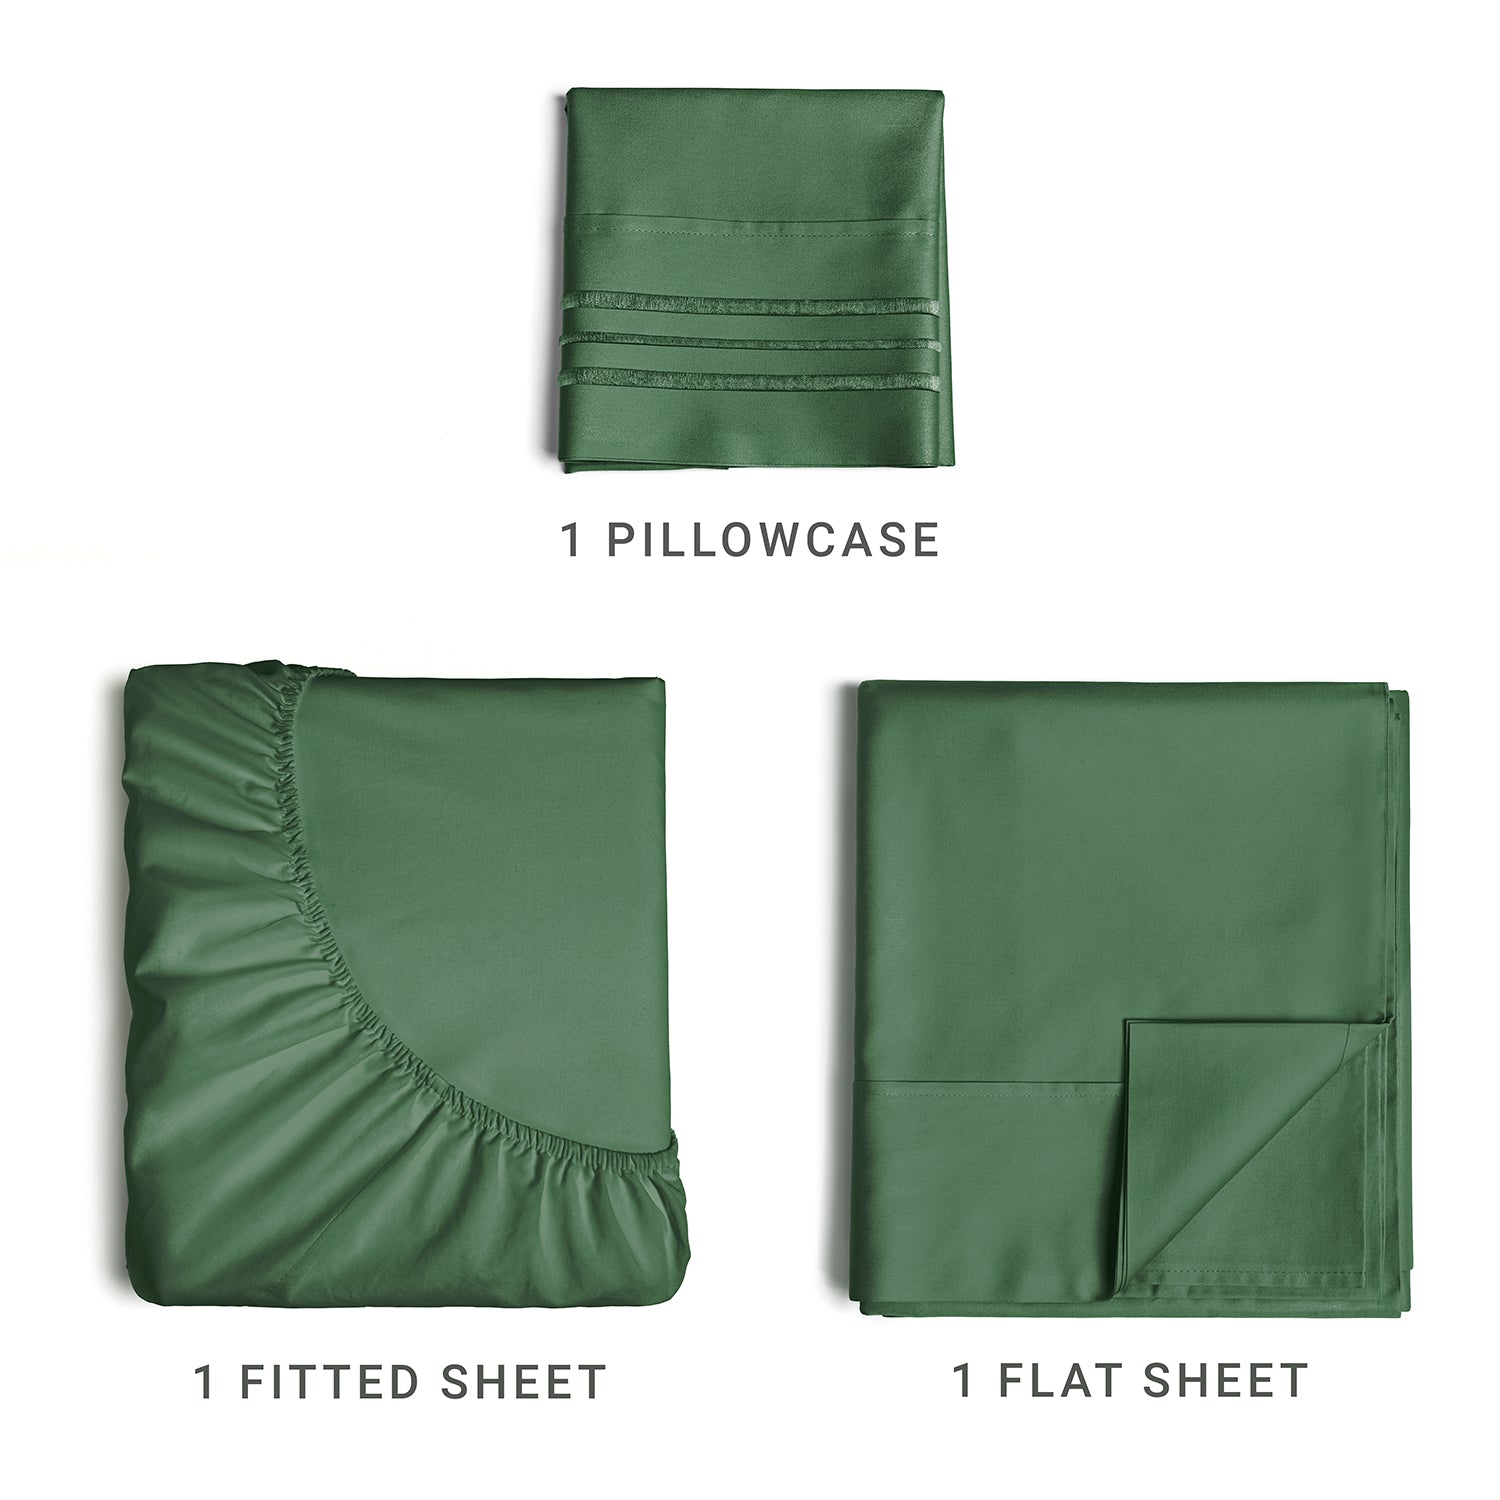 tes 4pc Sheet Set New Colors/Patterns - Emerald Green